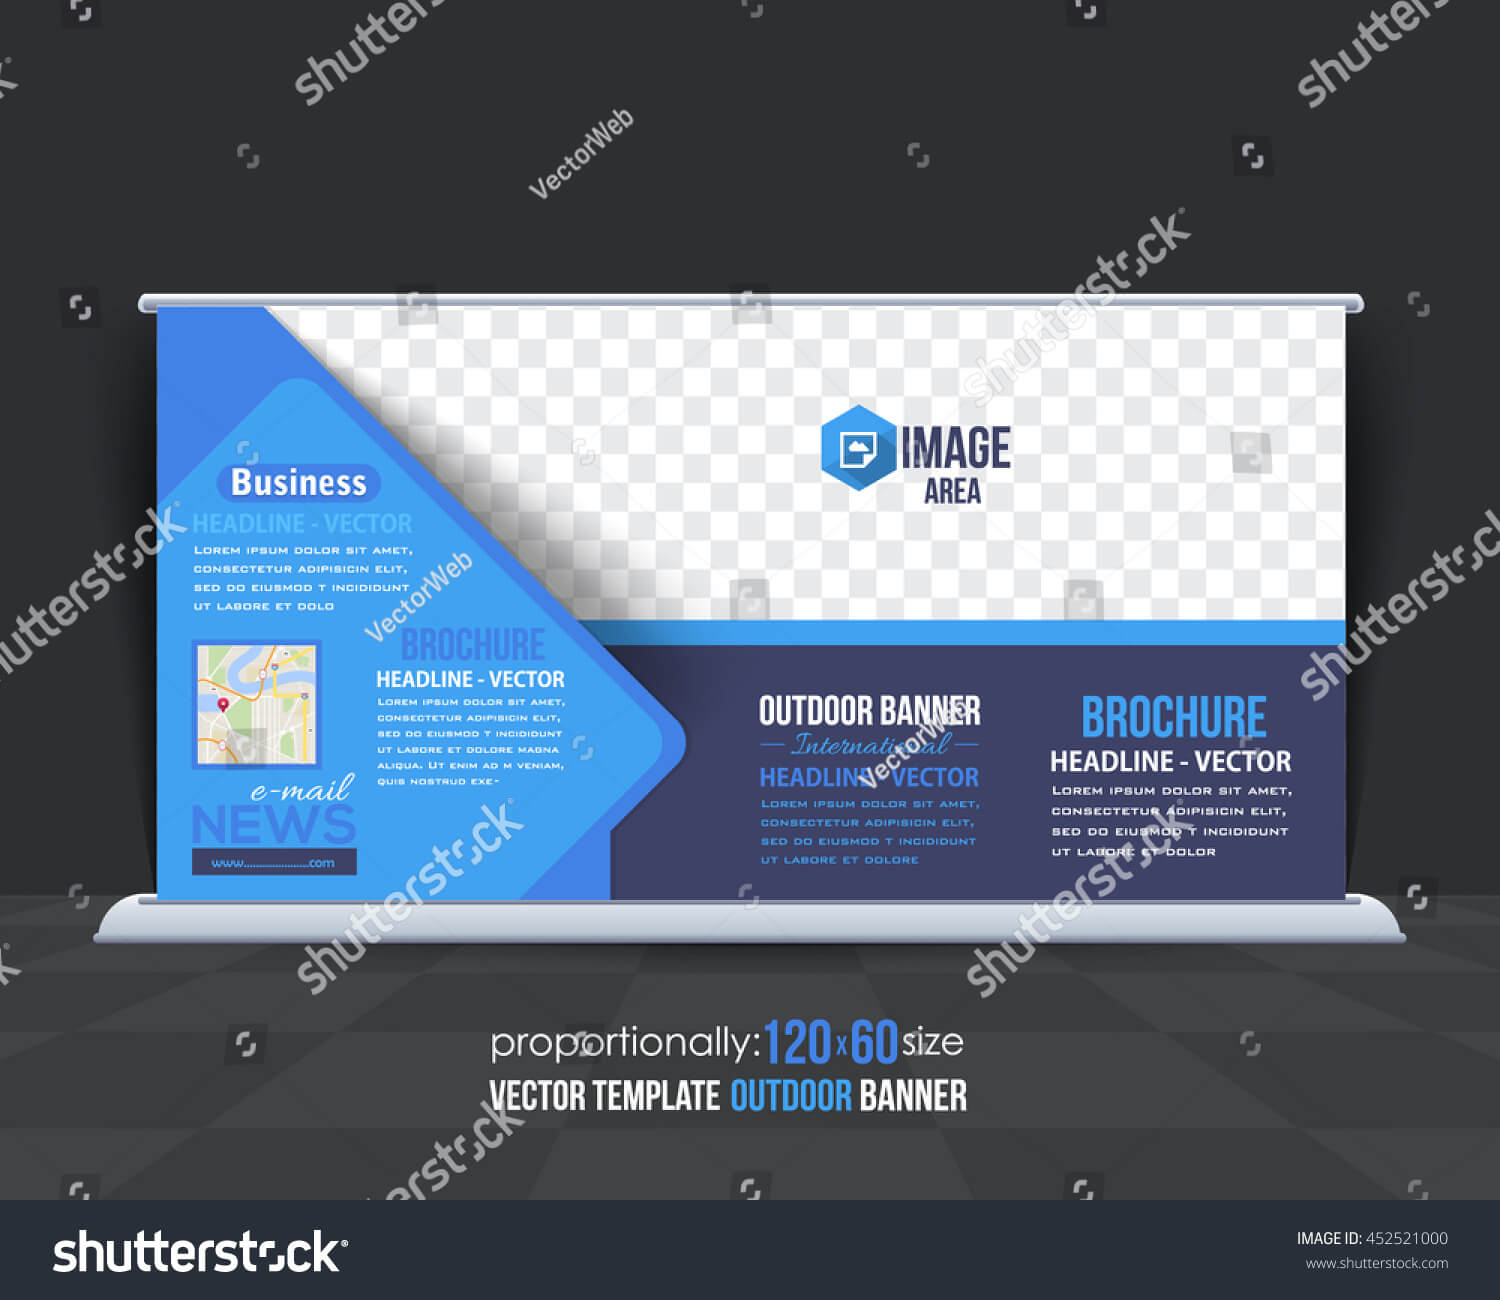 Business Theme Outdoor Banner Design Advertising Stock Within Outdoor Banner Design Templates